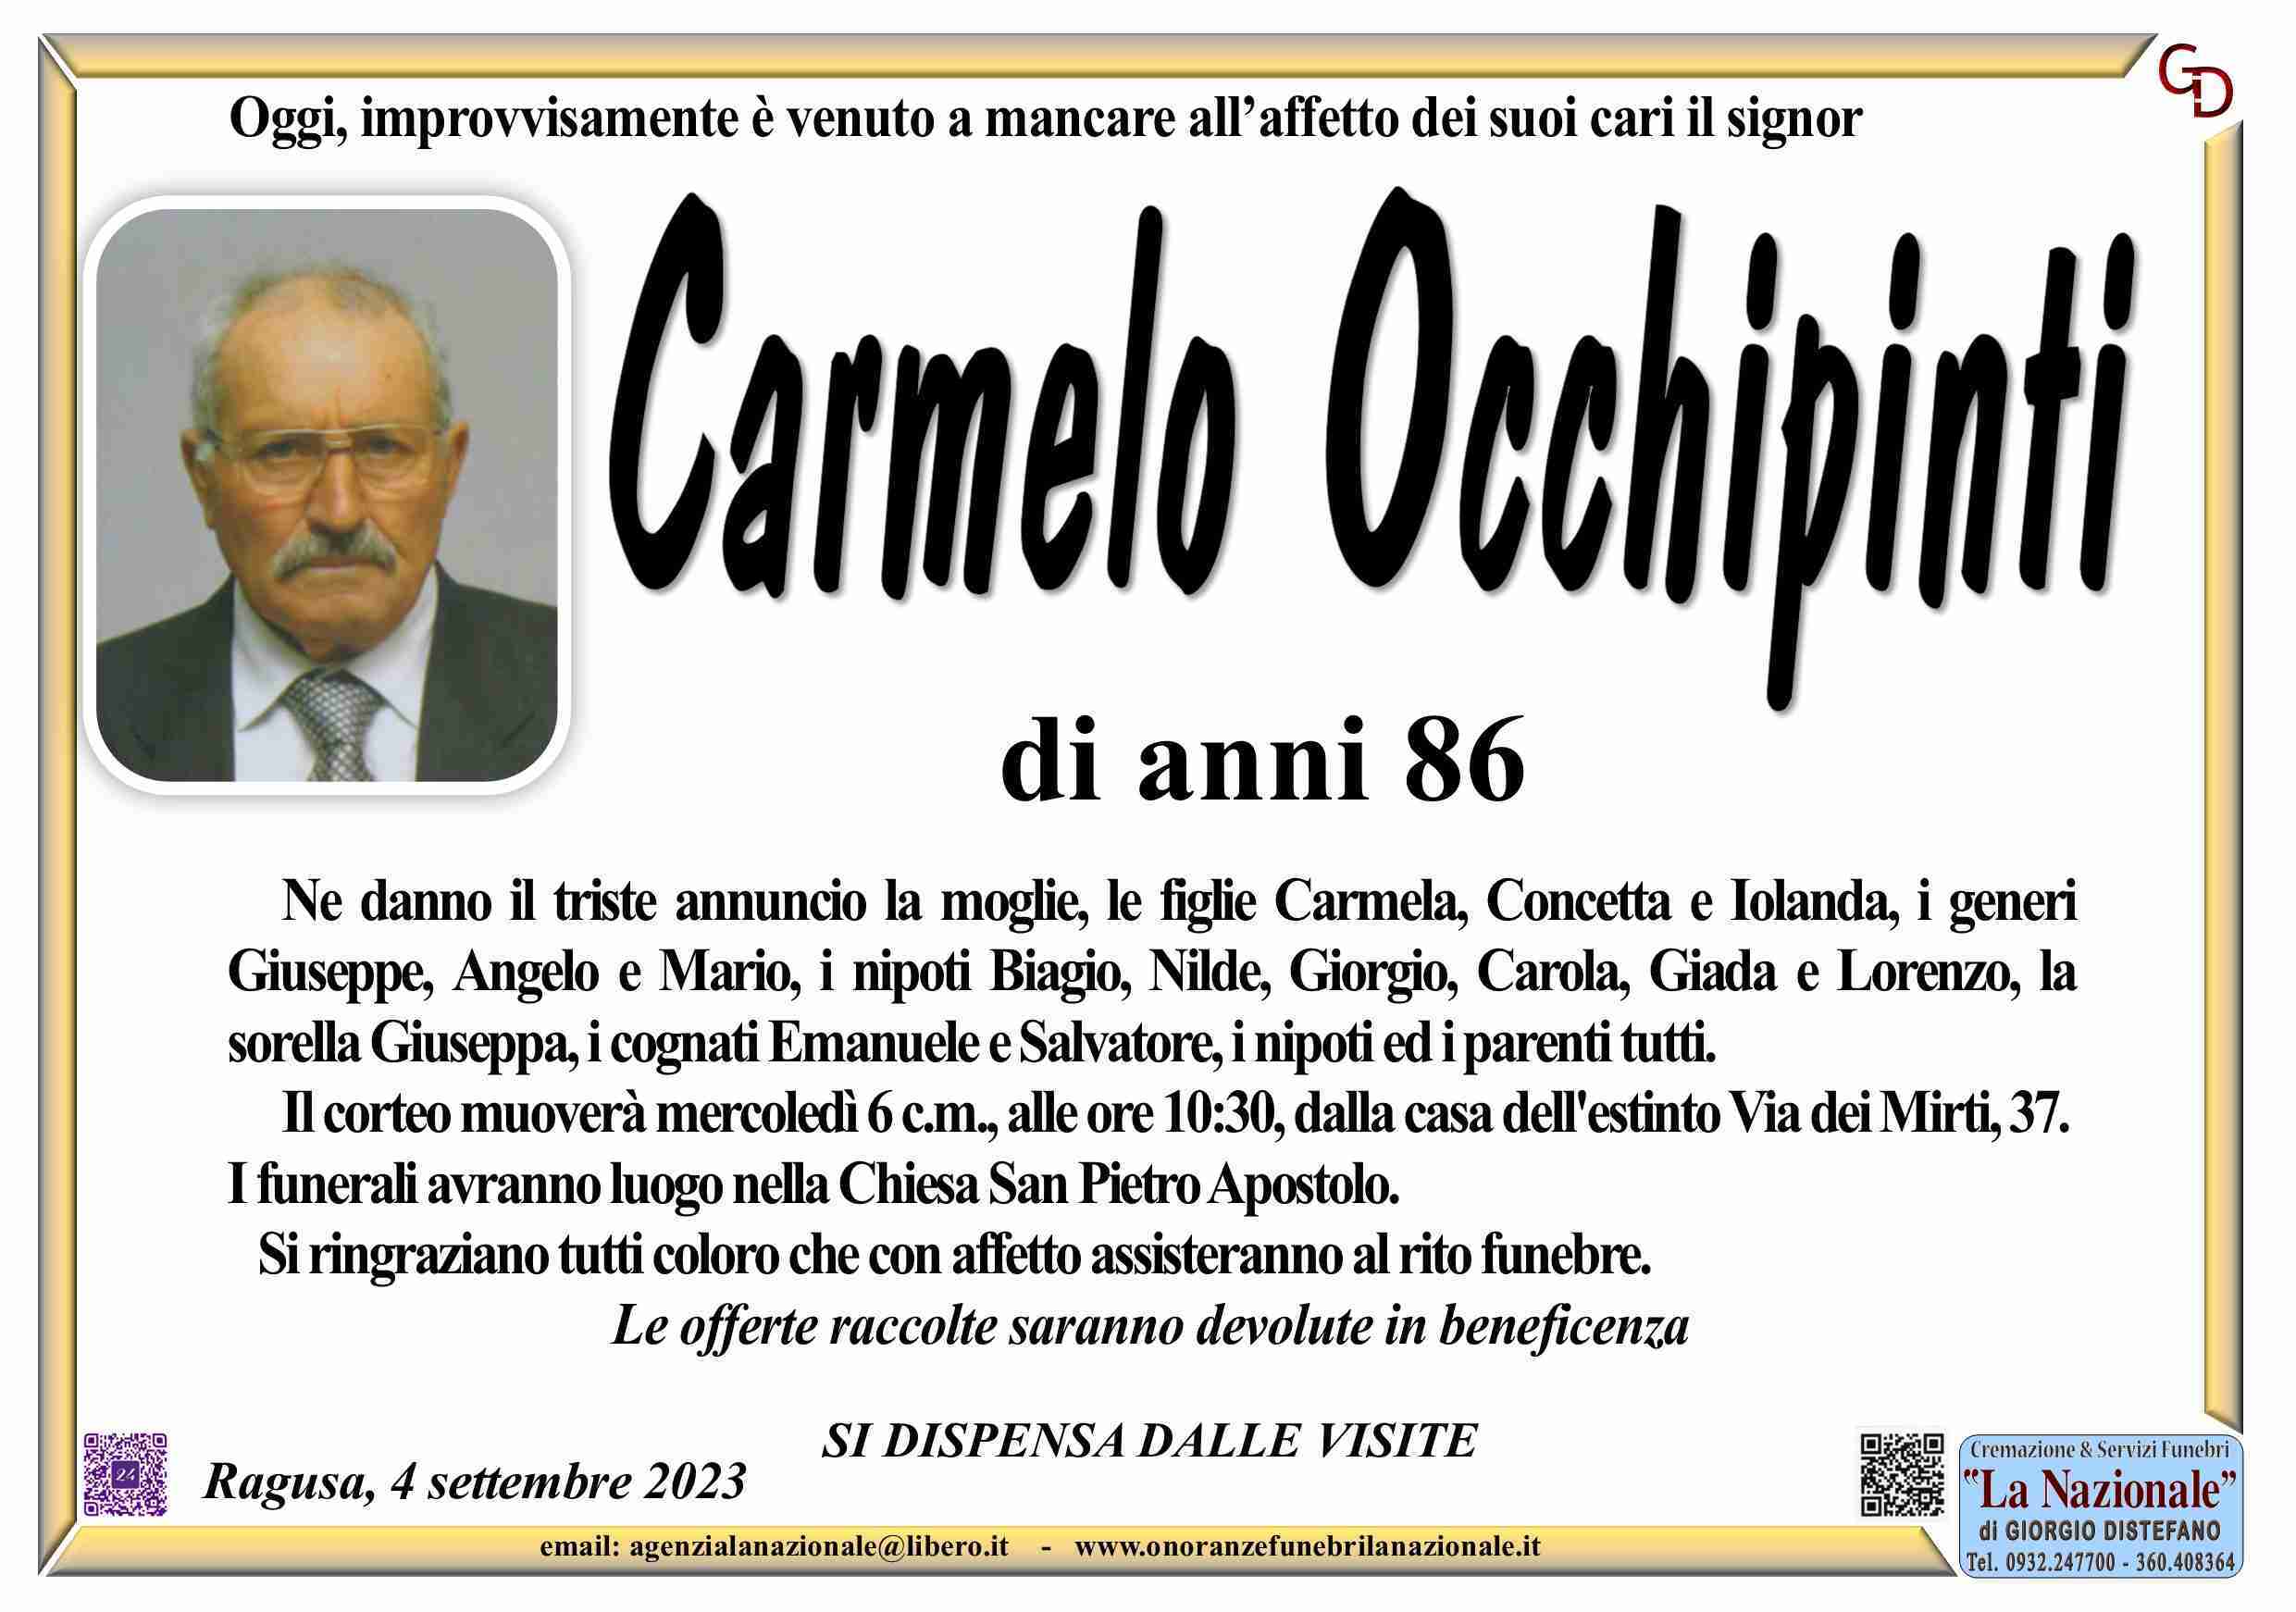 Carmelo Occhipinti